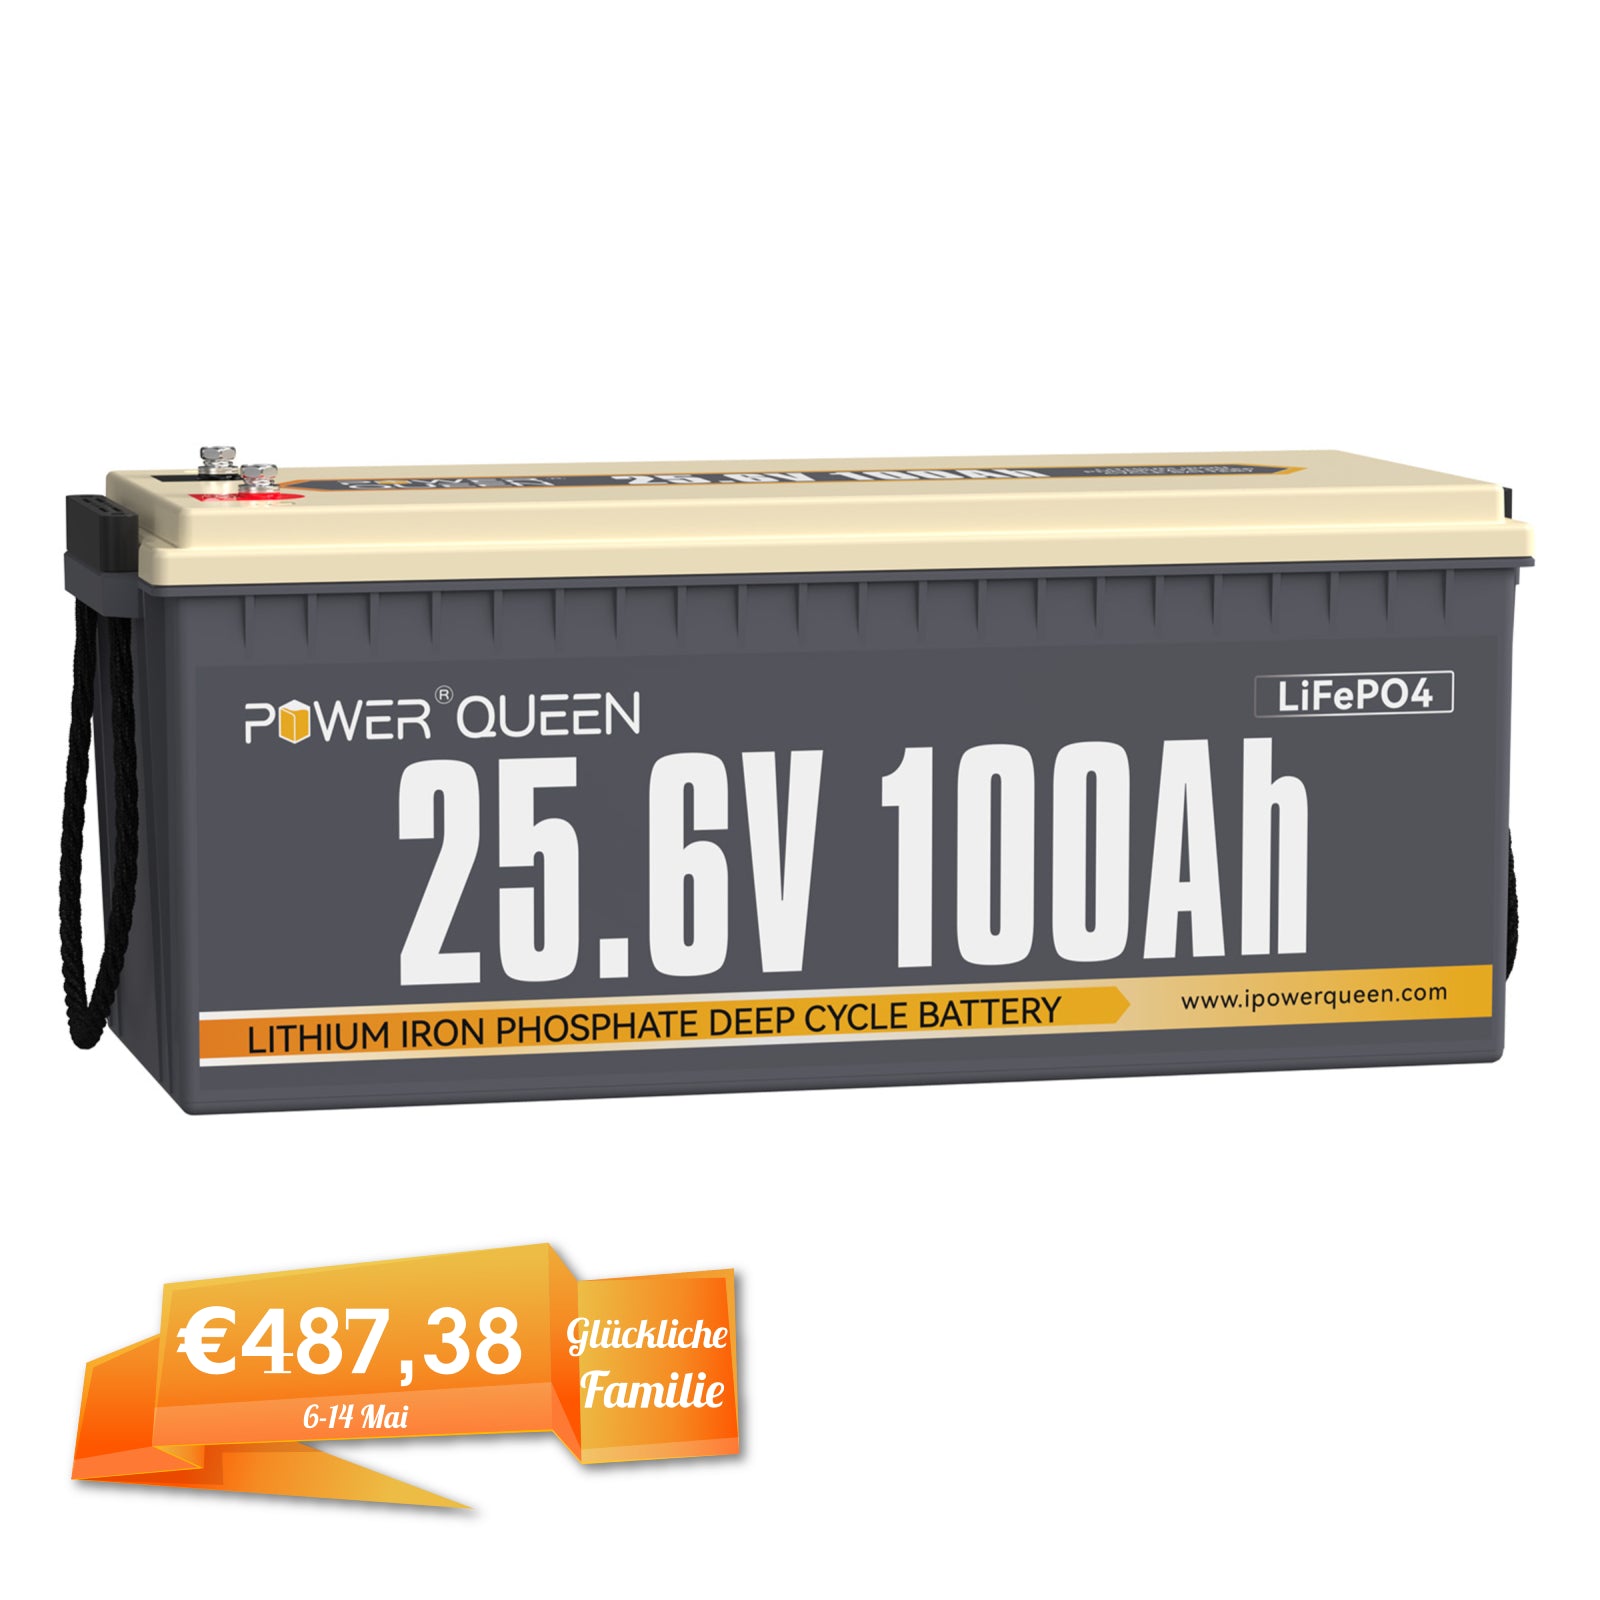 【TVA 0%】 Batterie Power Queen 24V 100Ah LiFePO4, BMS 100A intégré